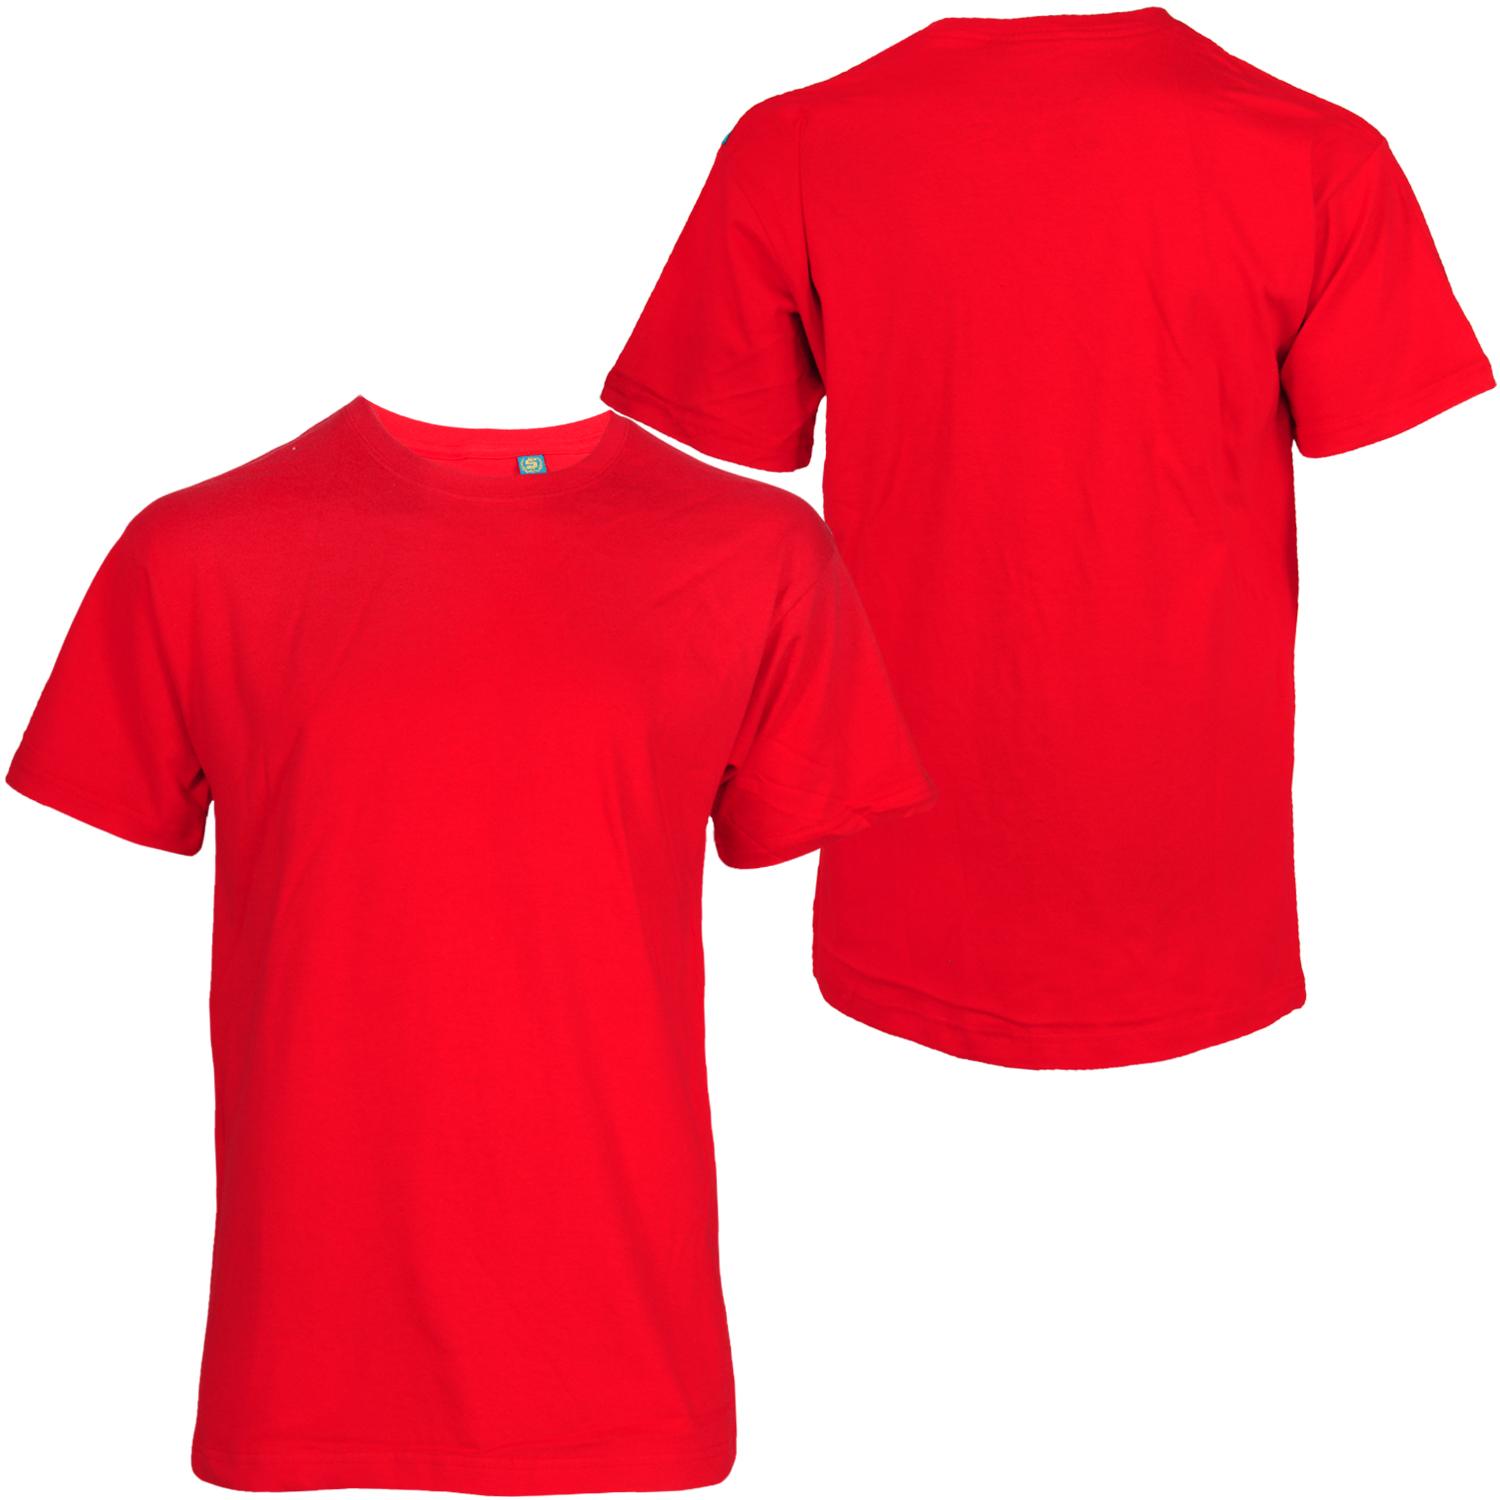 Foto Shmack Shmack Basic Blank T-shirt Rot Camisetas Rojo